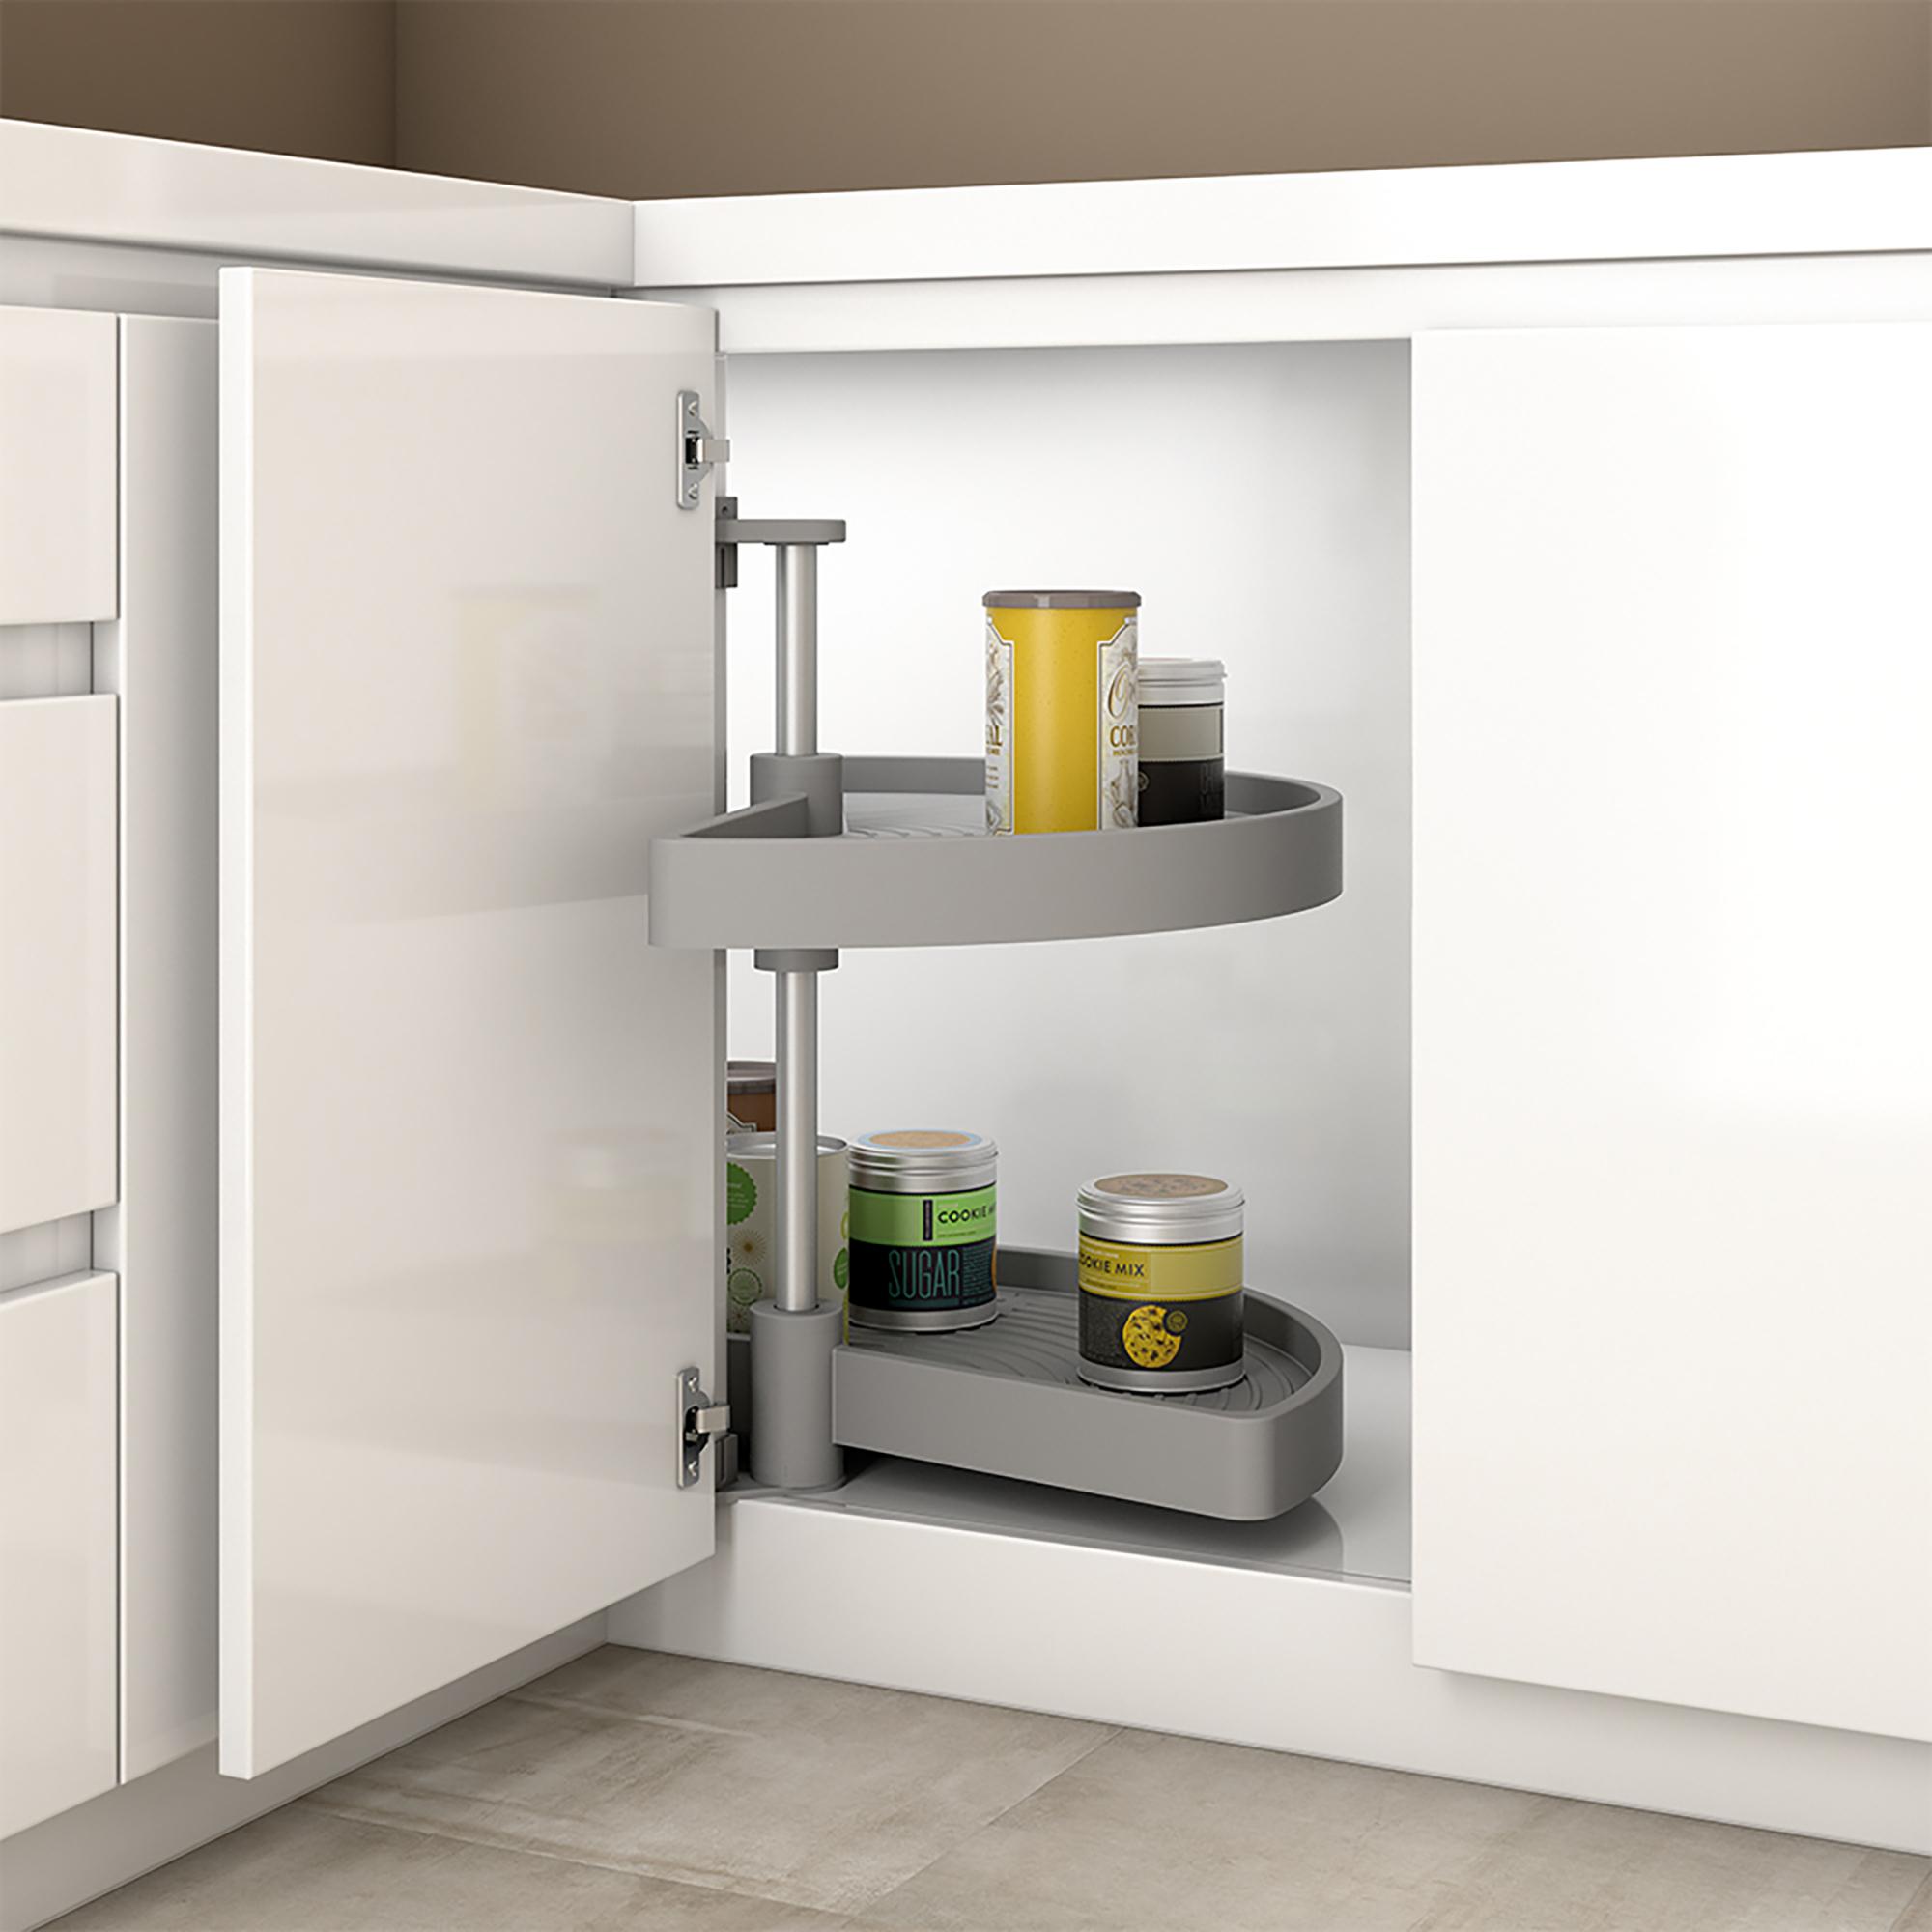 3 4 Carousel Emuca Swivel Shelf Trays for Kitchen Cabinet Corner Unit 